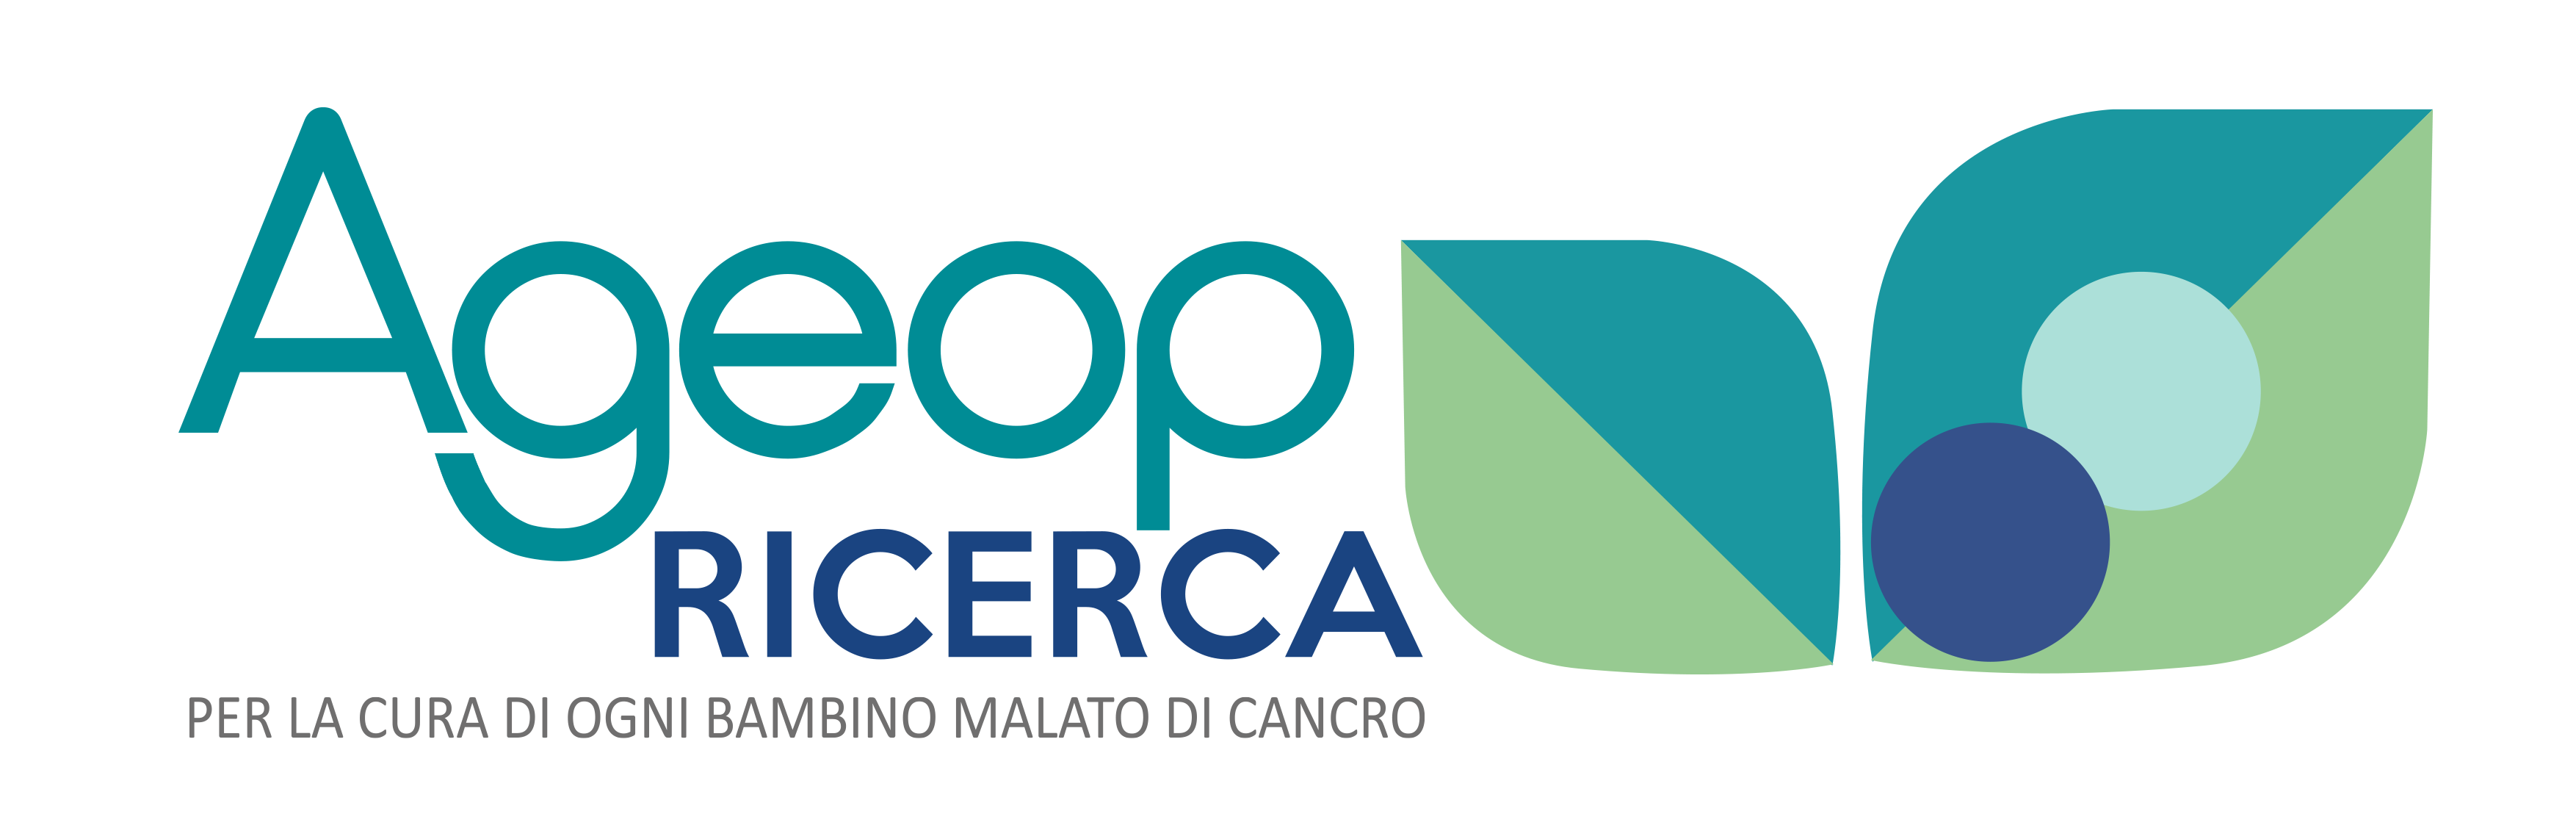 AGEOP RICERCA - ODV logo